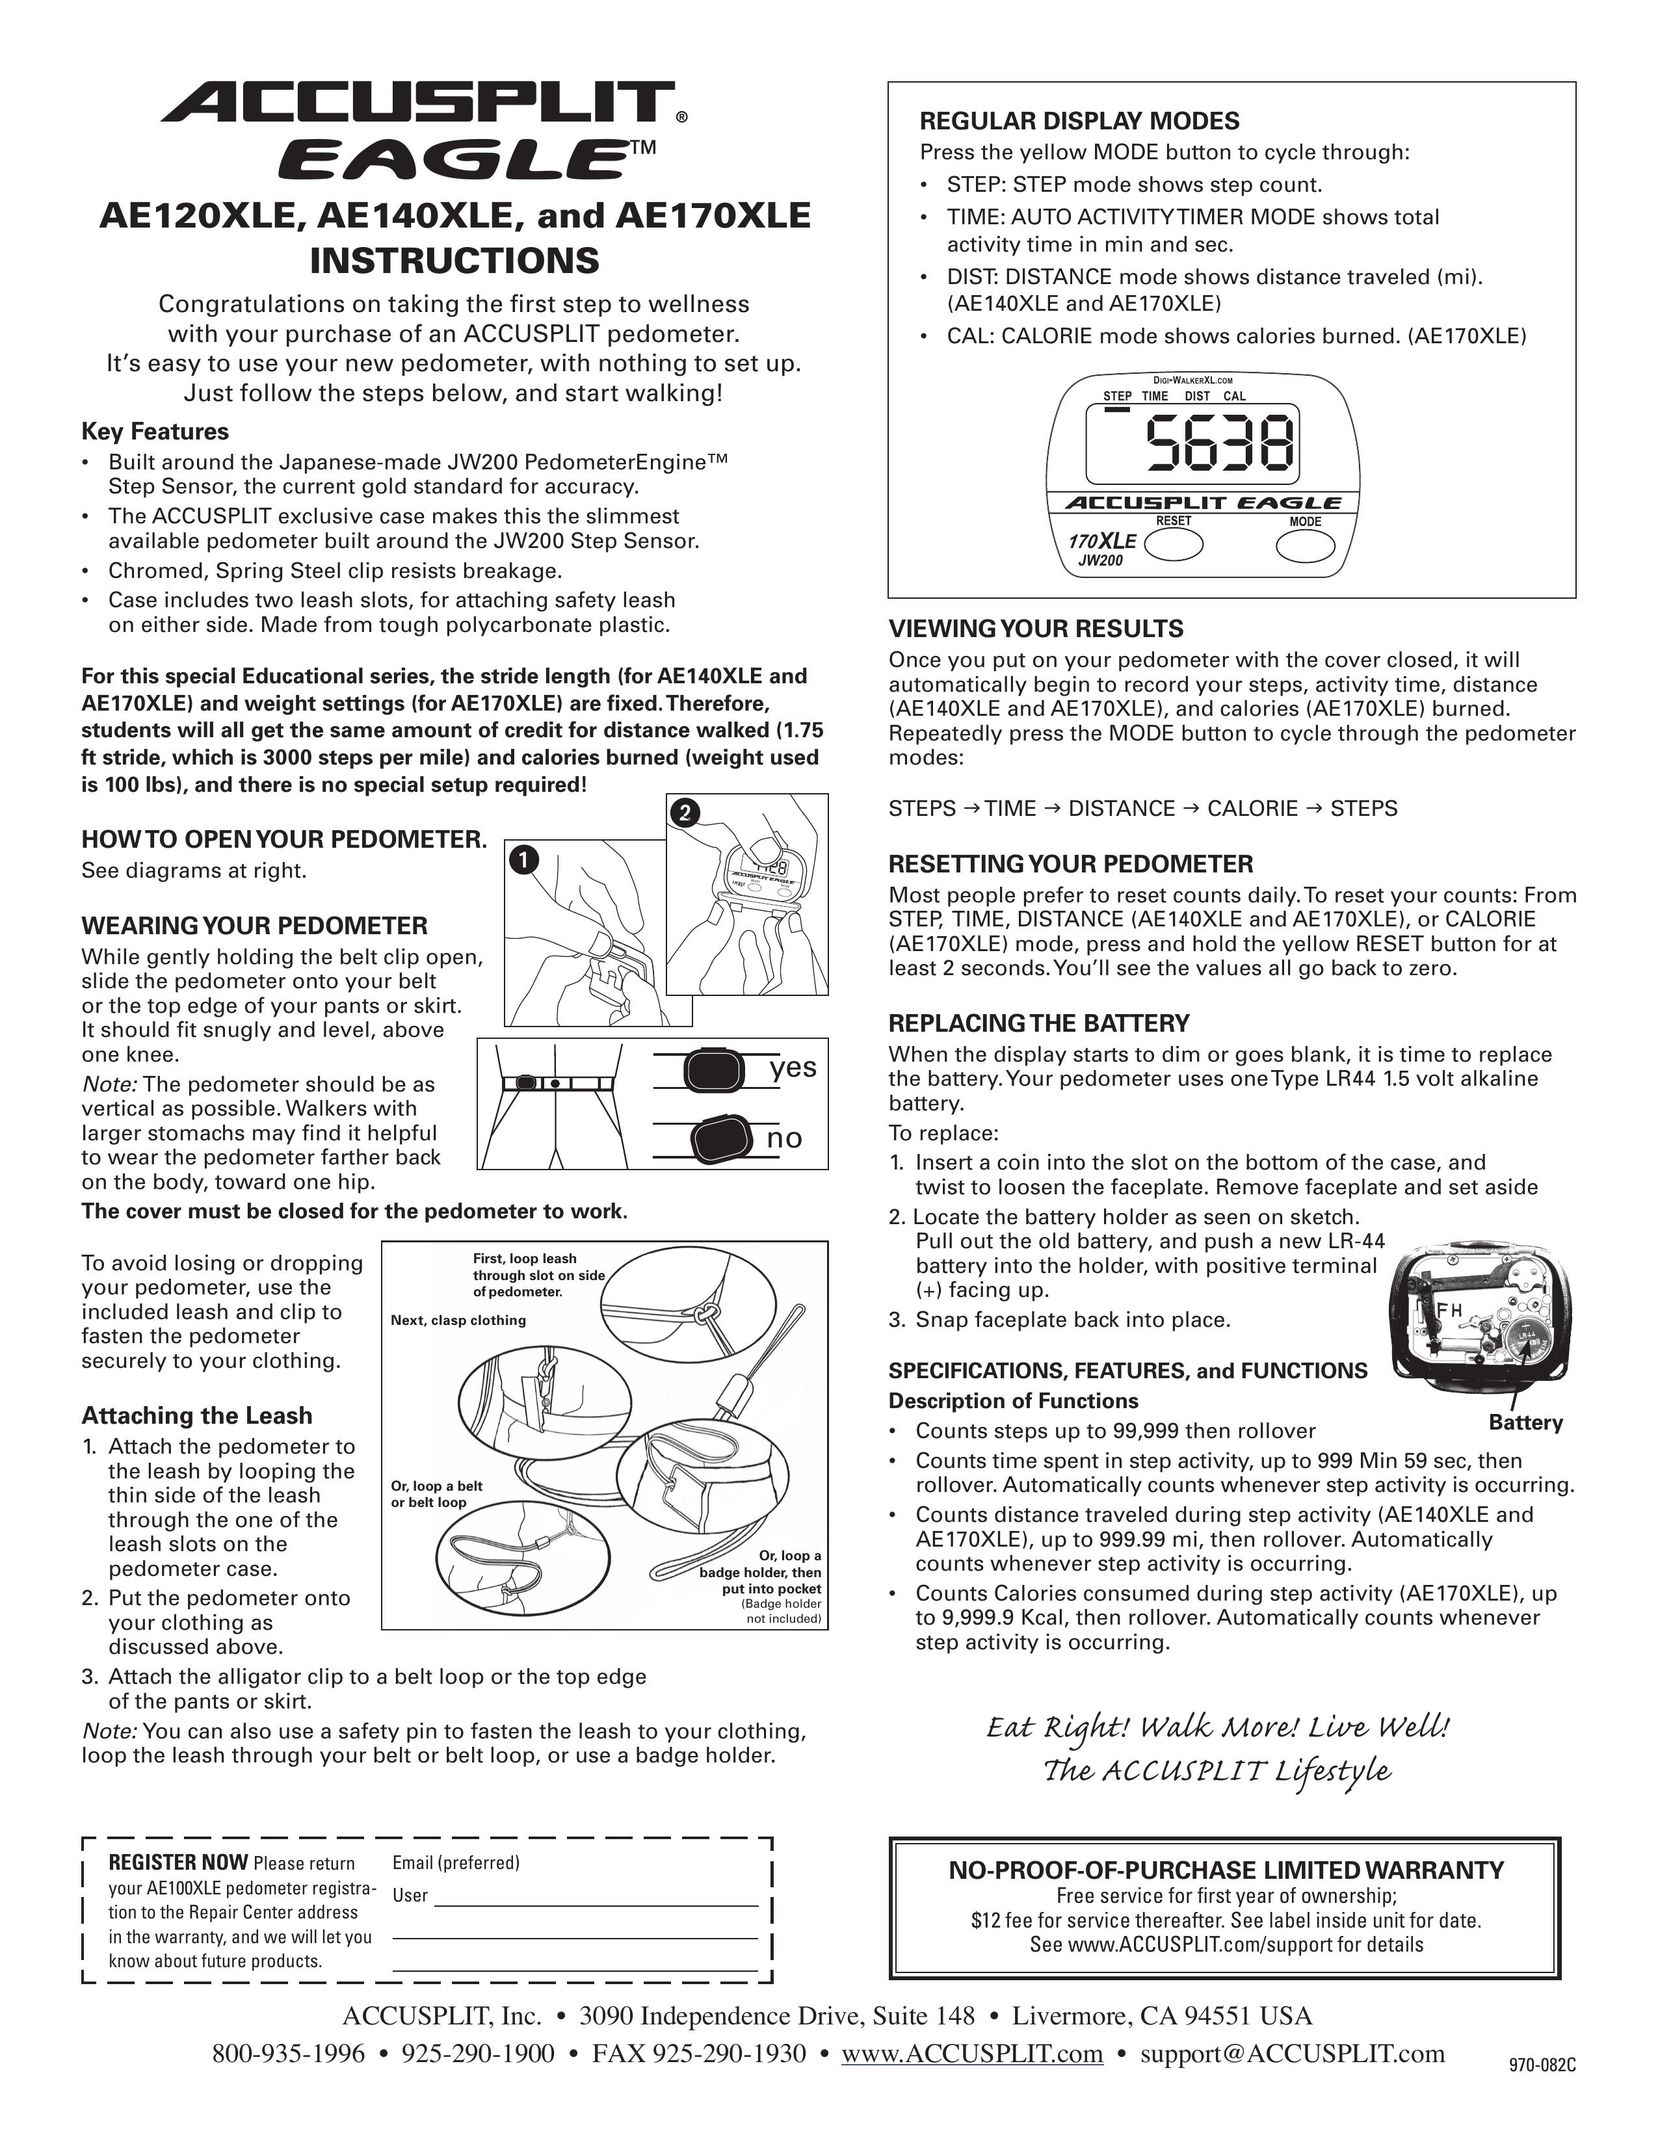 Accusplit AE140XLE Fitness Electronics User Manual